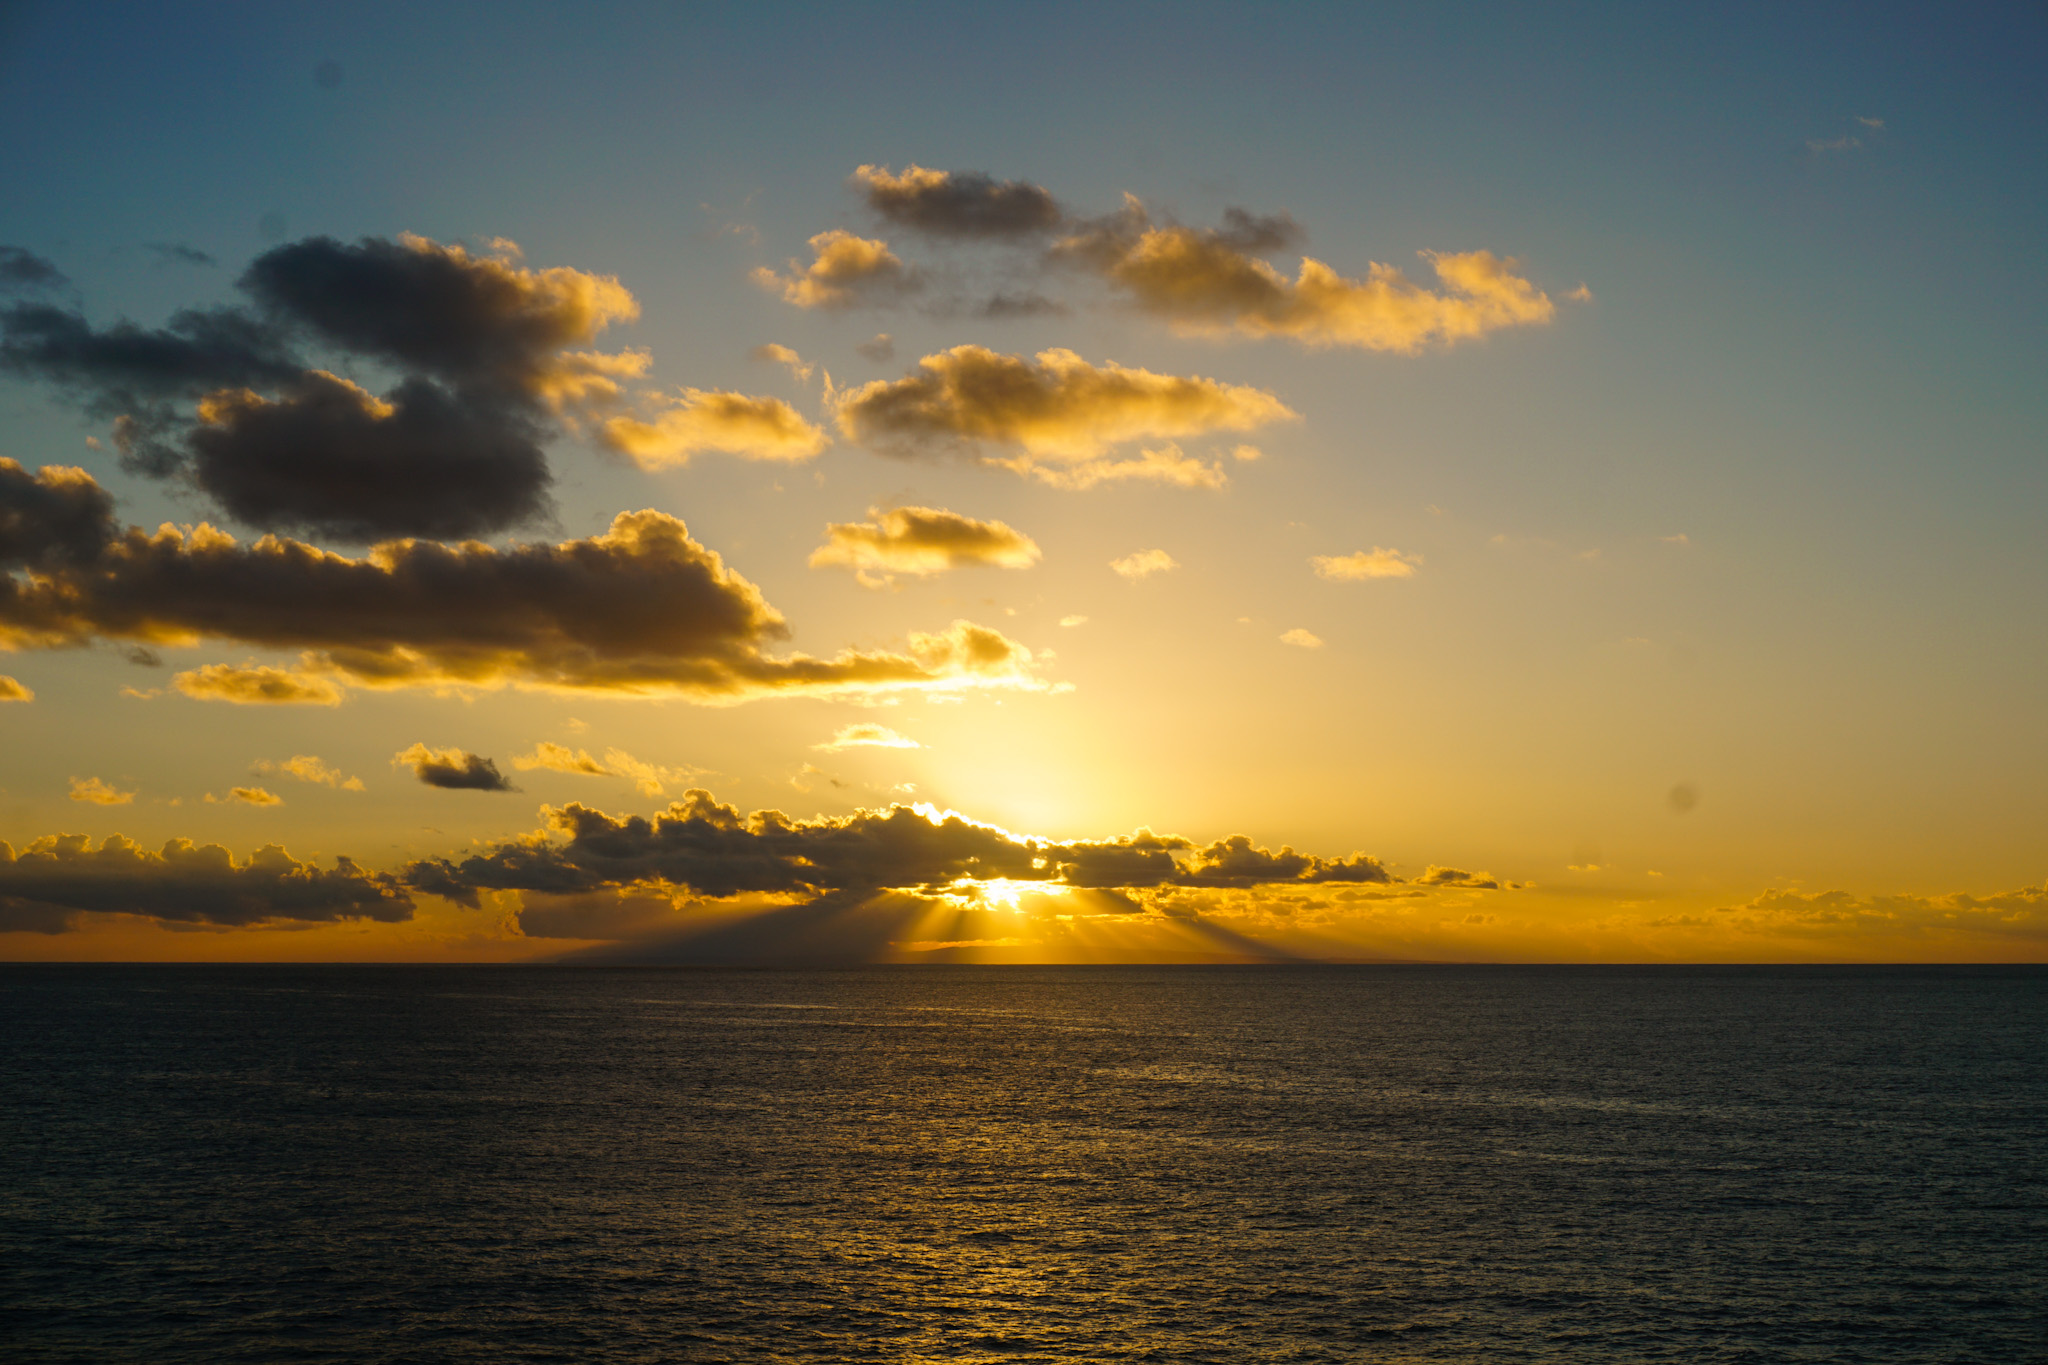 Sunrise from the Halona Blowhole Lookout near Halona Cove Eternity Beach, Oahu, Hawaii